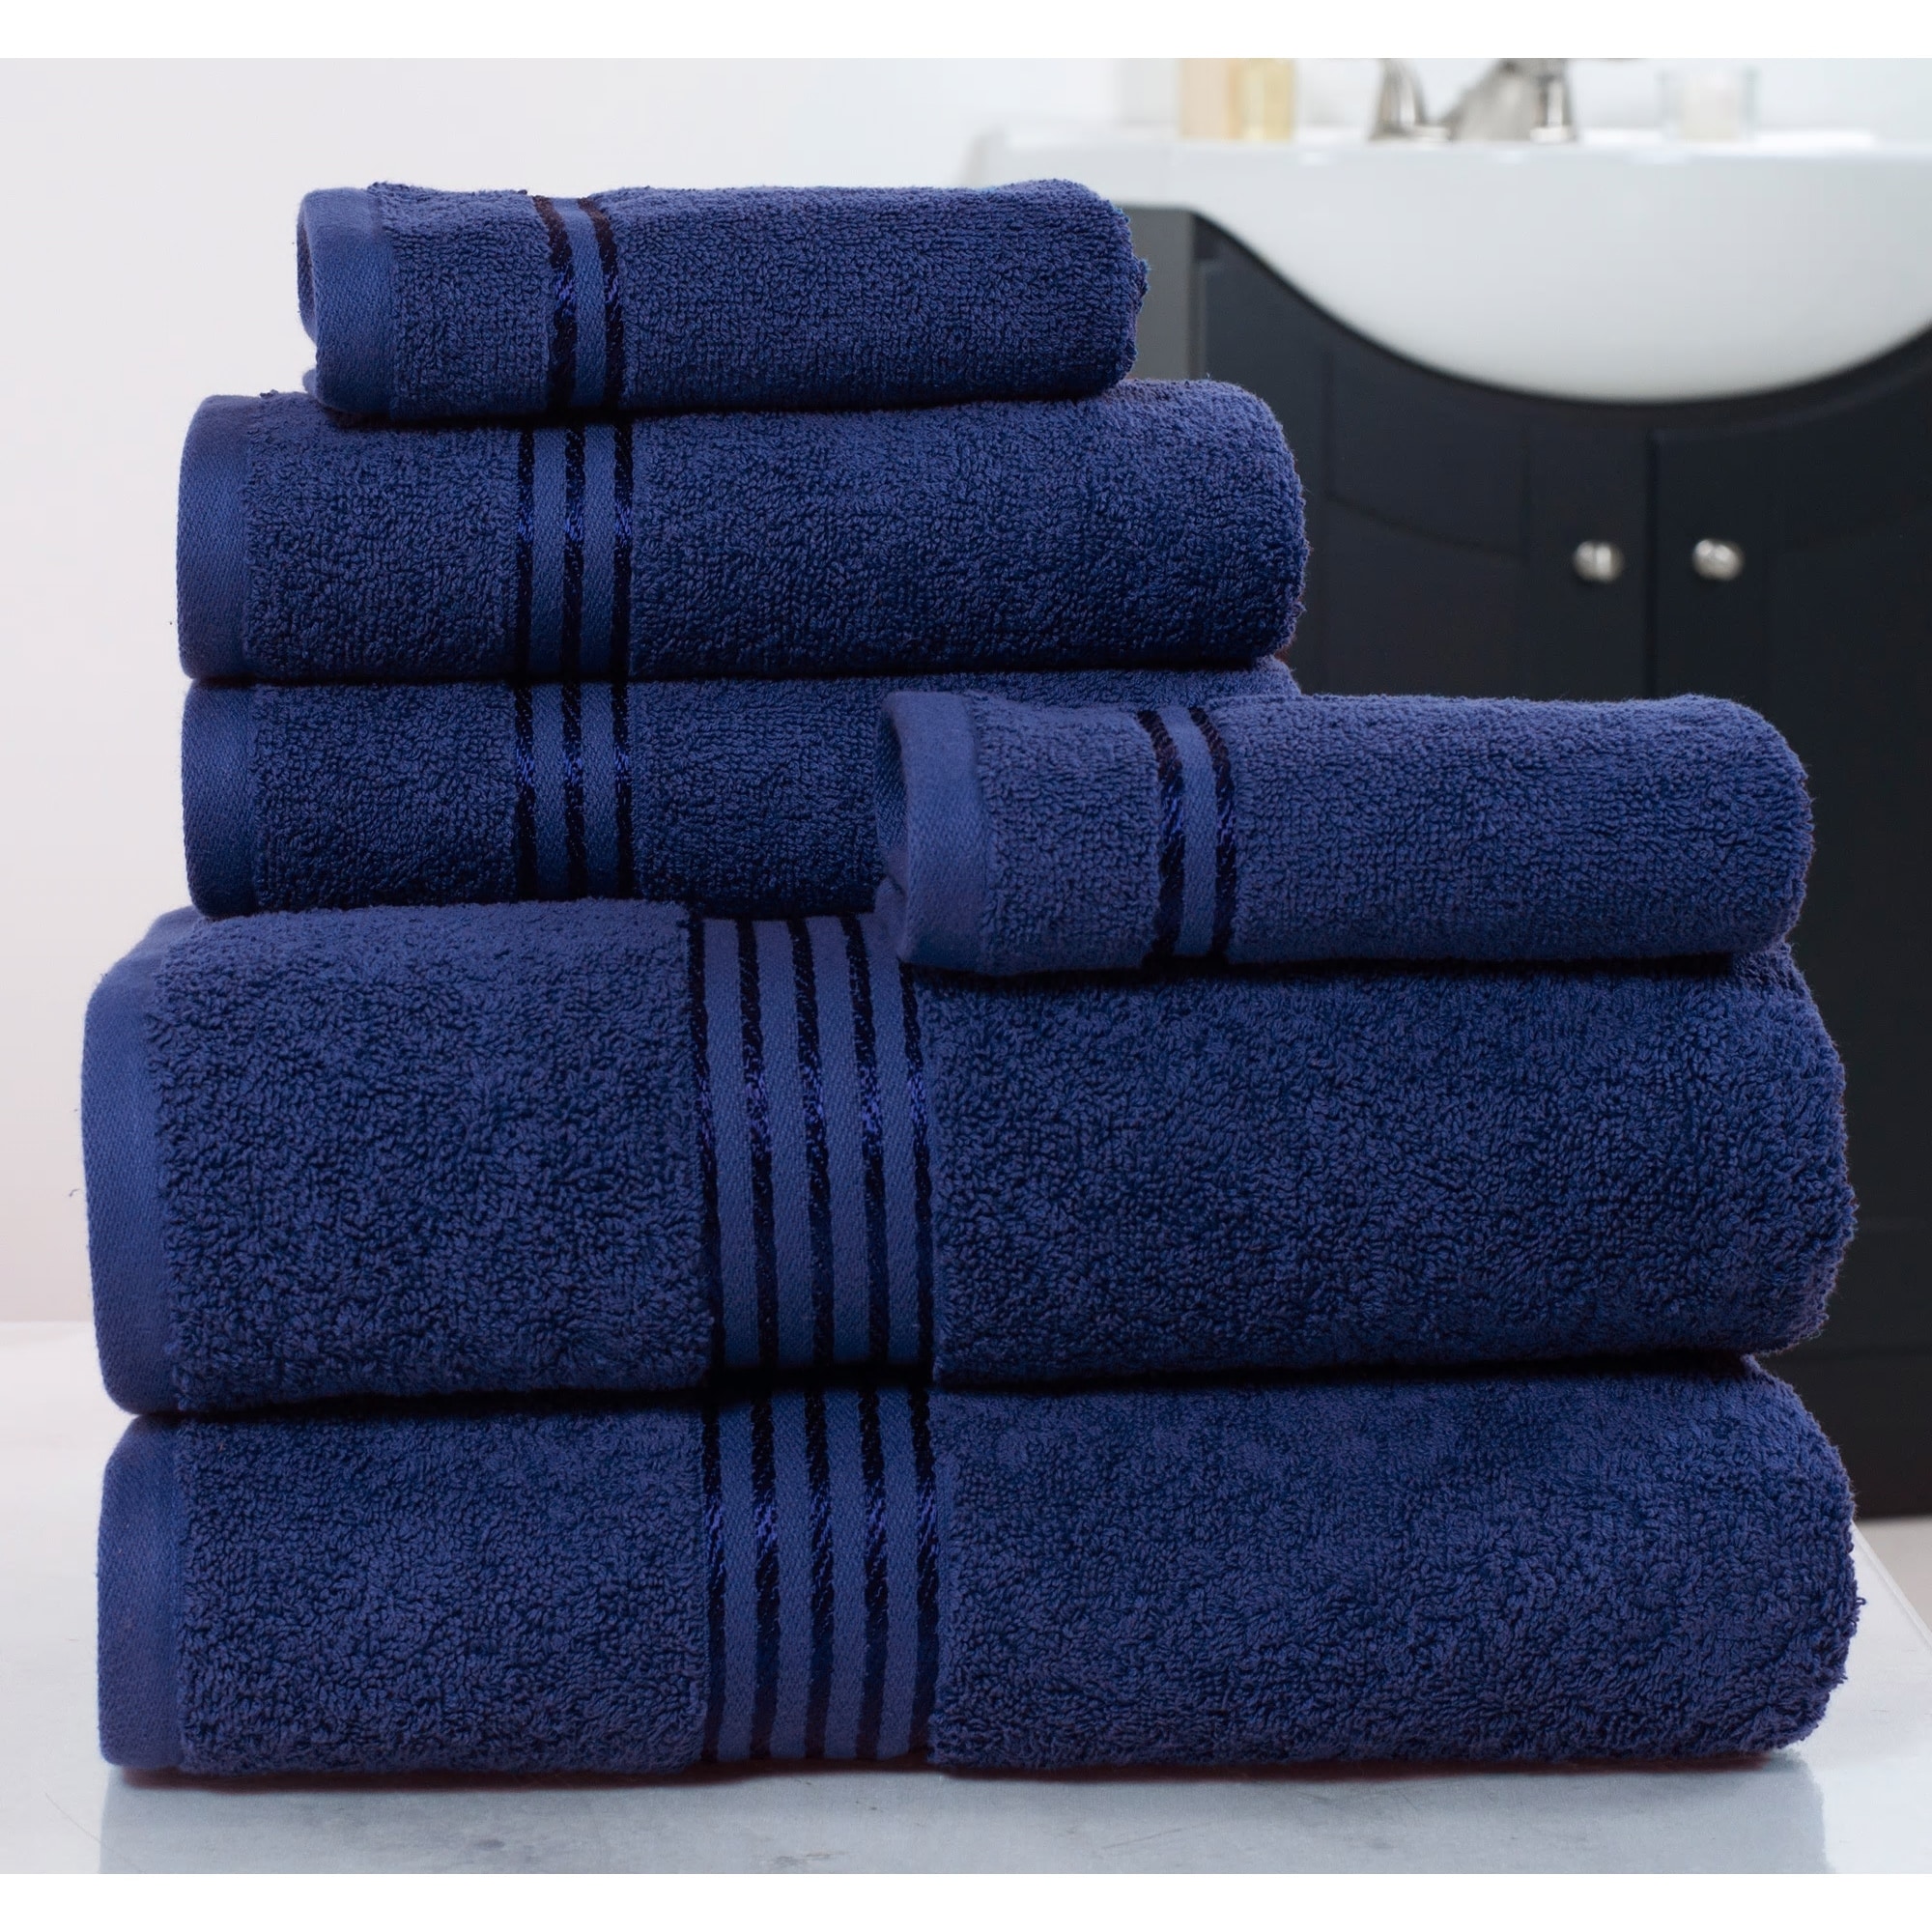 https://ak1.ostkcdn.com/images/products/is/images/direct/dedd0e135d60286df065e2ab893ec54eadeeedf2/Windsor-Home-100-percent-Cotton-Hotel-6-piece-Towel-Set.jpg